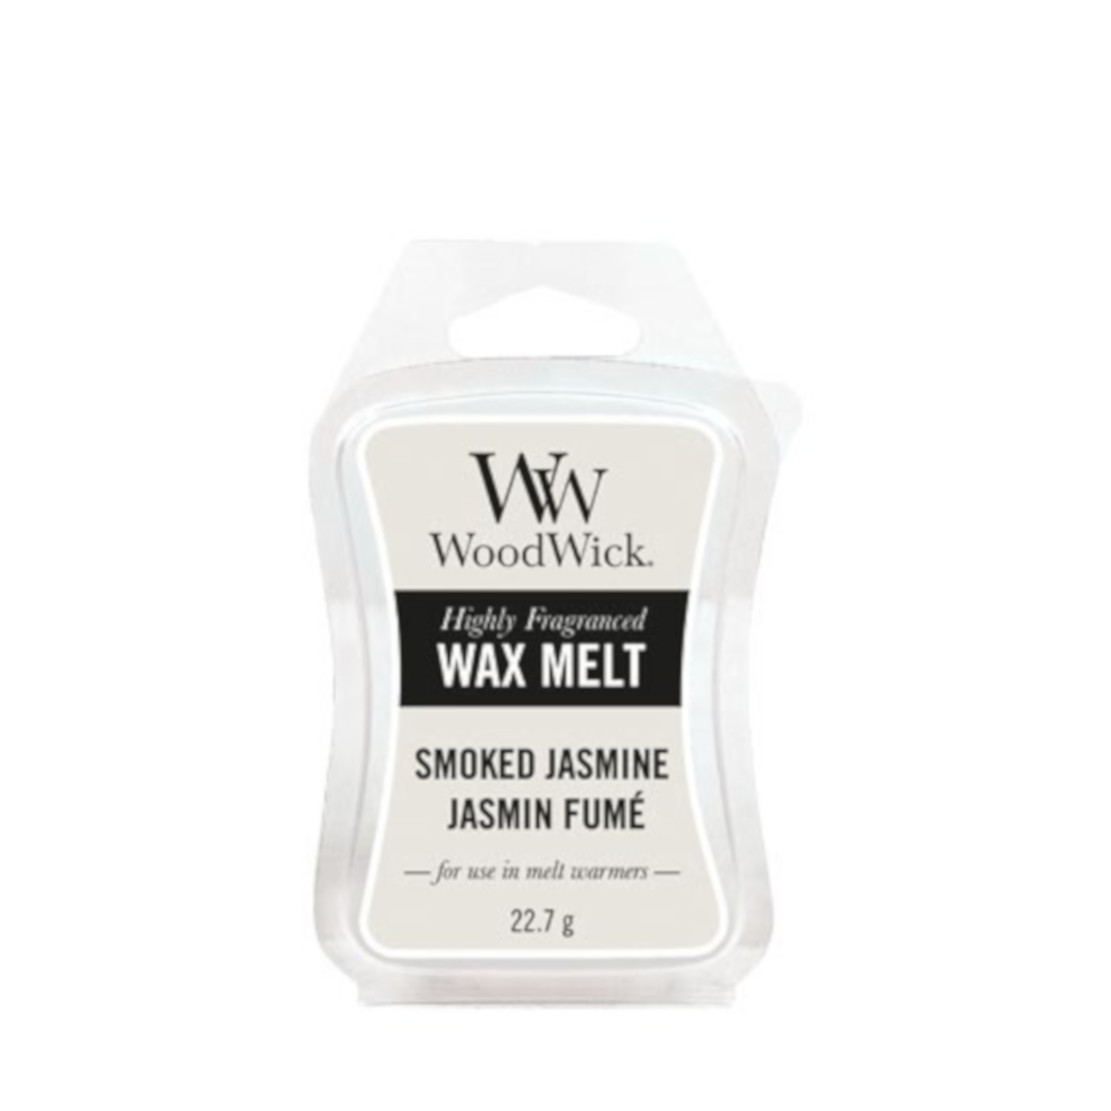 Woodwick Smoked Jasmine Wax Melt